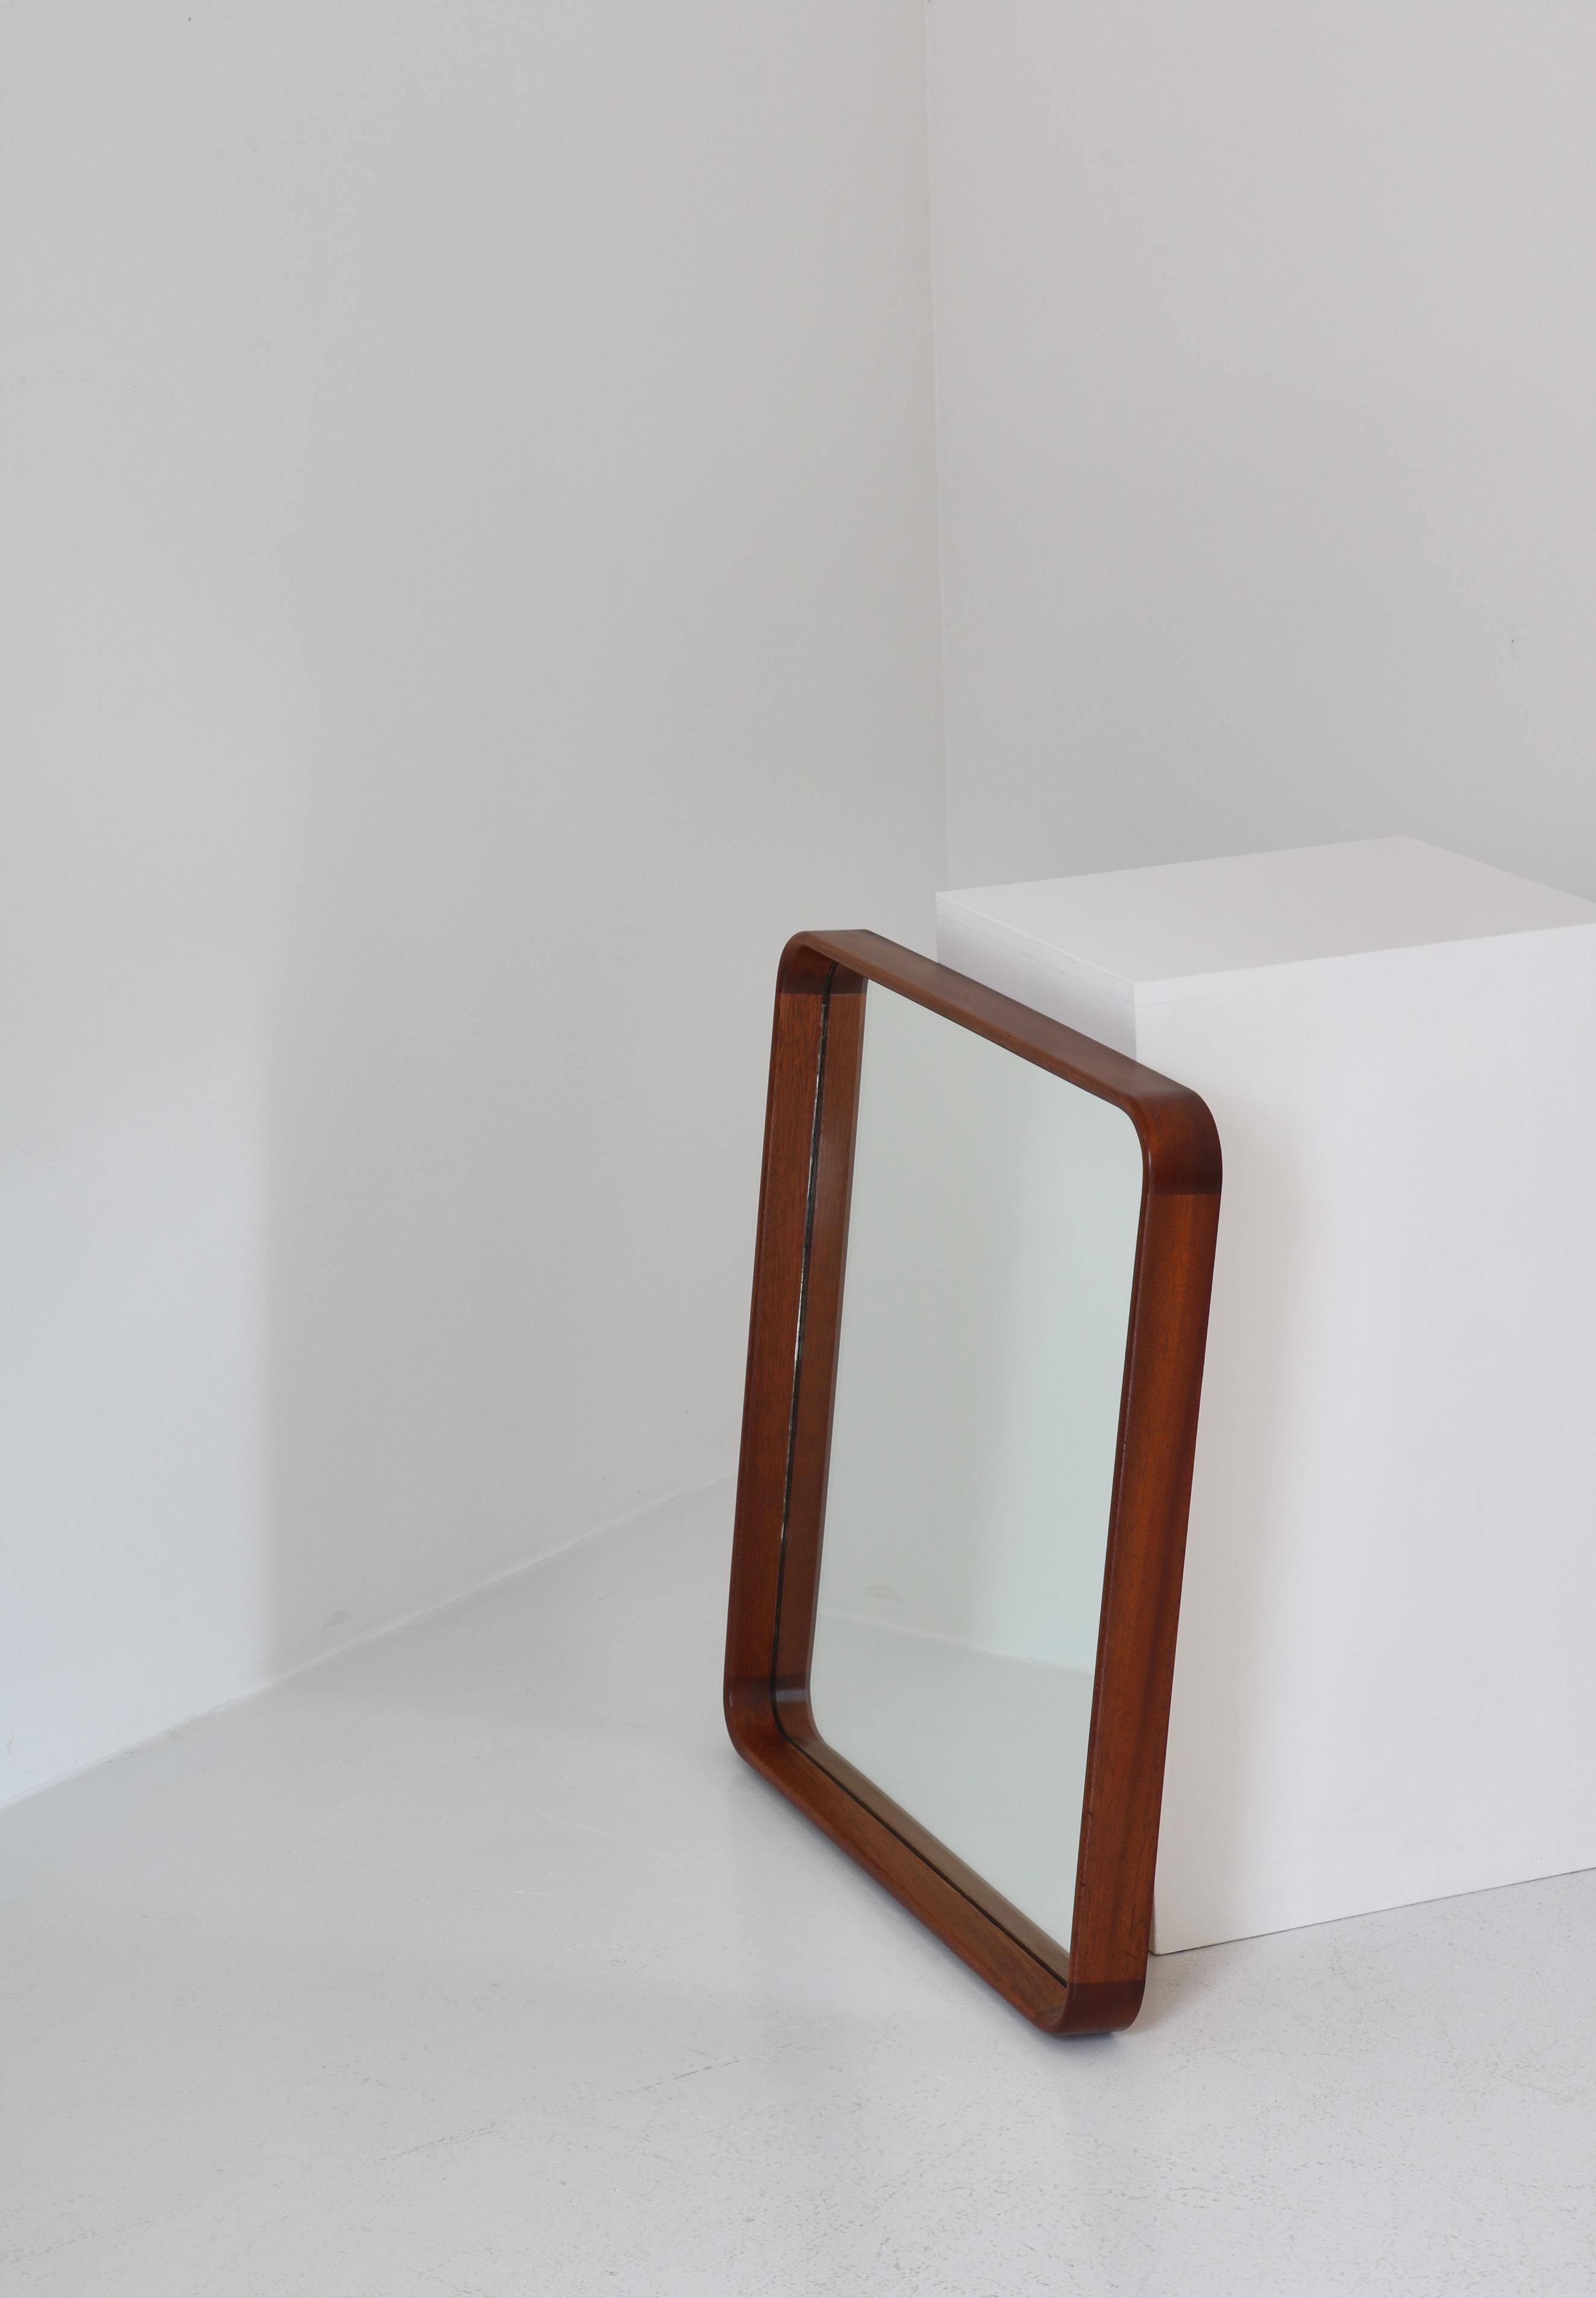 Vilhelm Lauritzen Wall Mirror in Mahogany, 1930s, Danish Modern For Sale 3